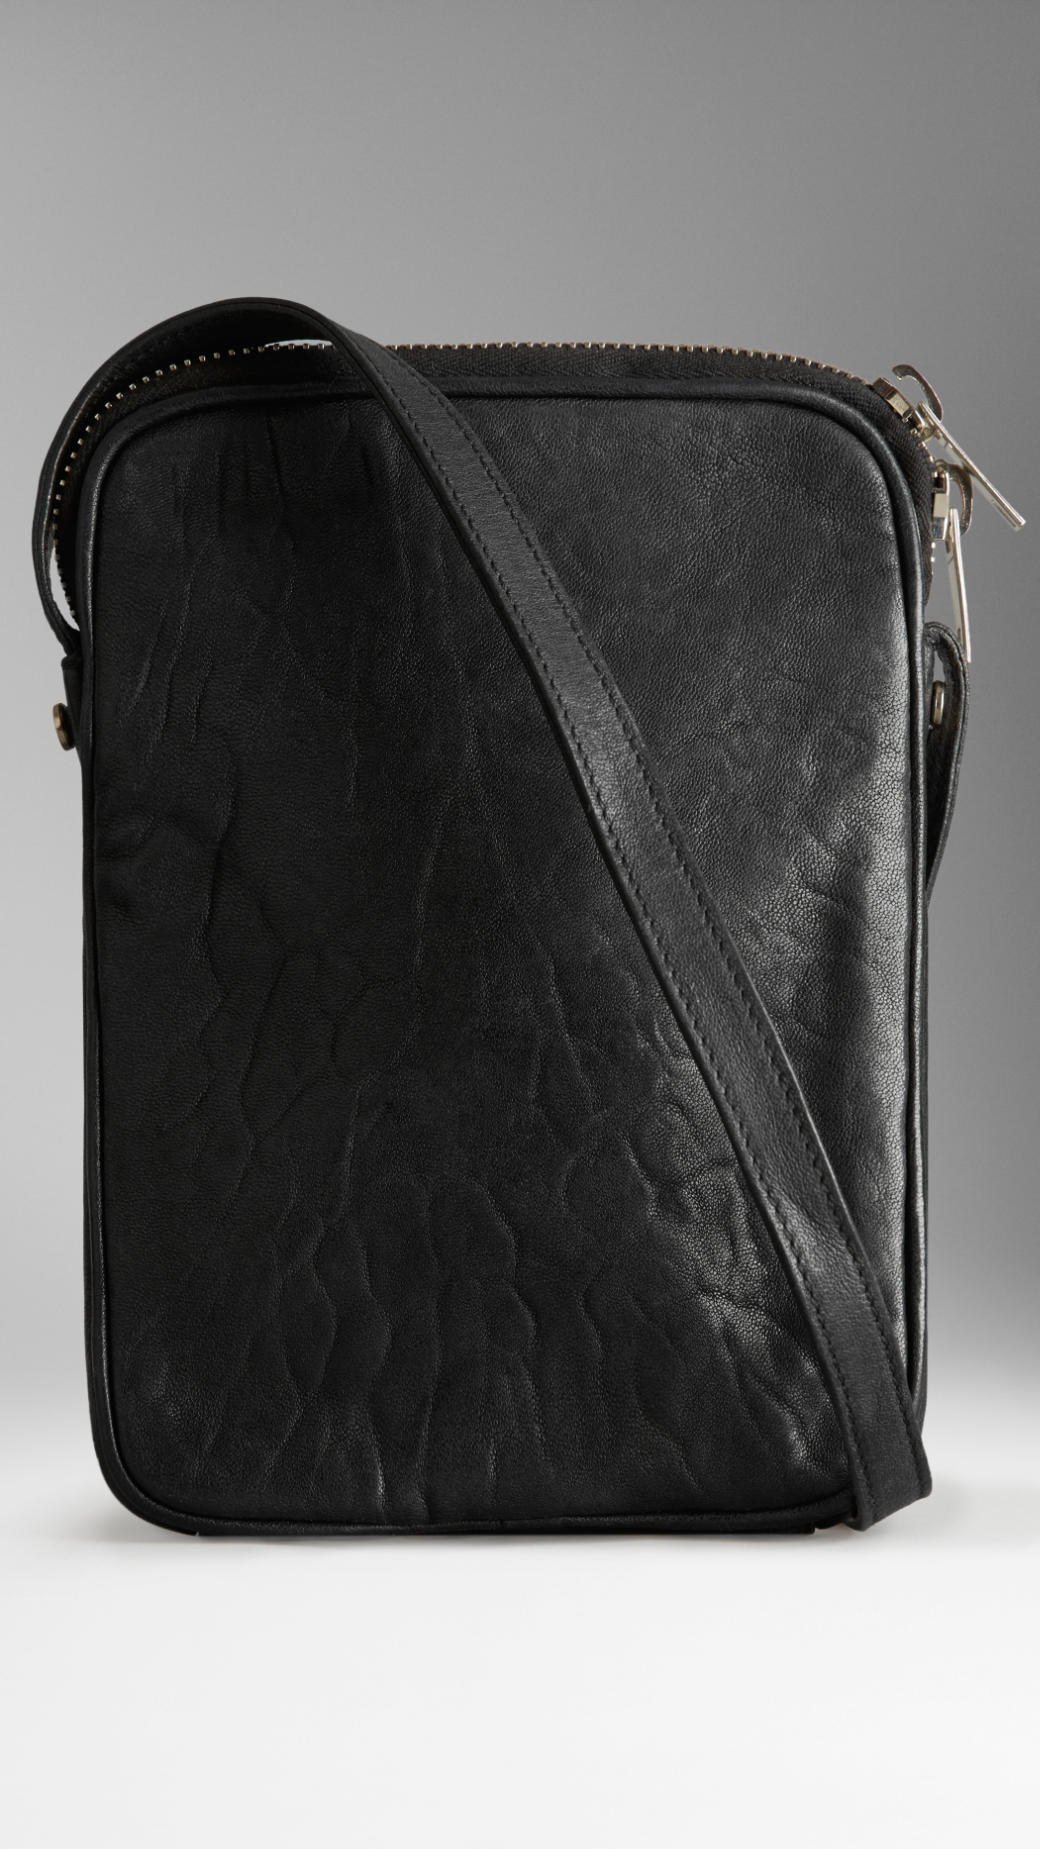 Lyst - Burberry Buffalo Leather Ipad Mini Crossbody Bag in Black for Men